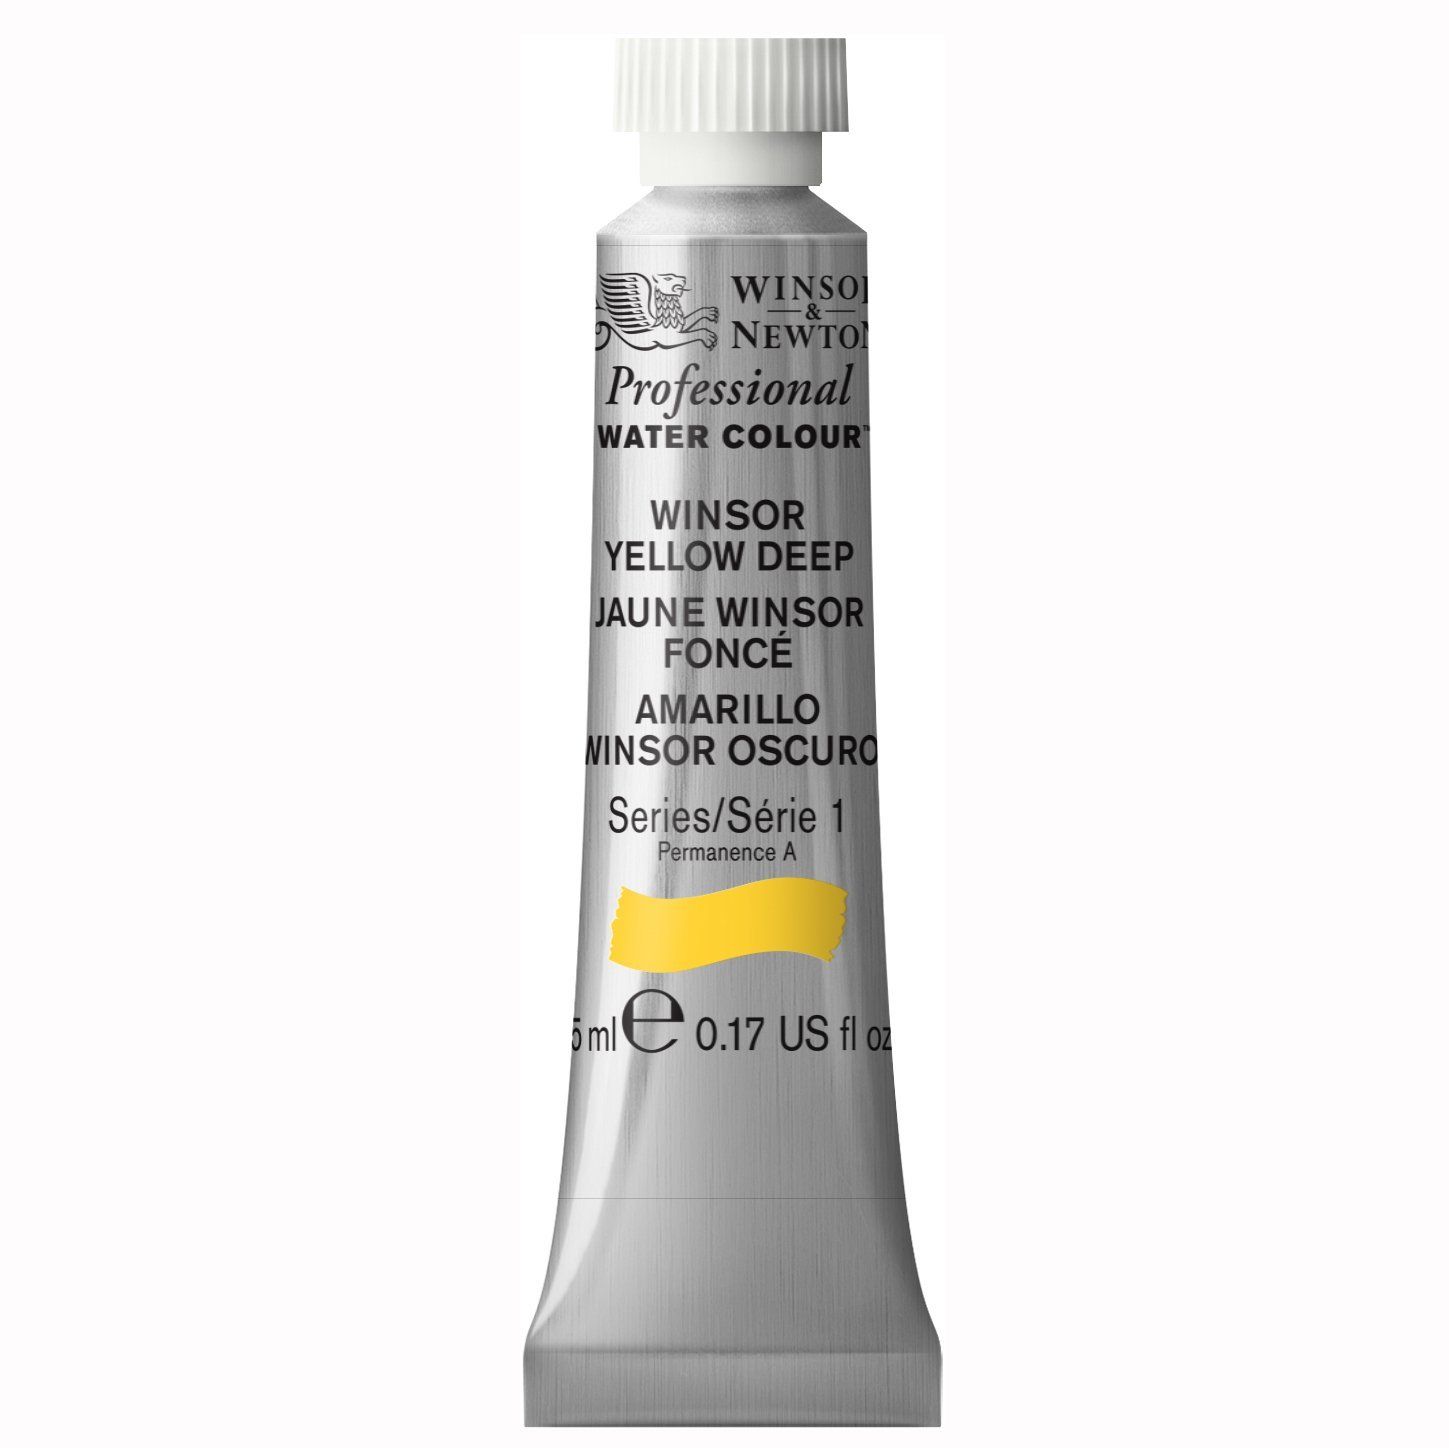 Winsor & Newton Watercolour Paint - Winsor Yellow Deep 5ml